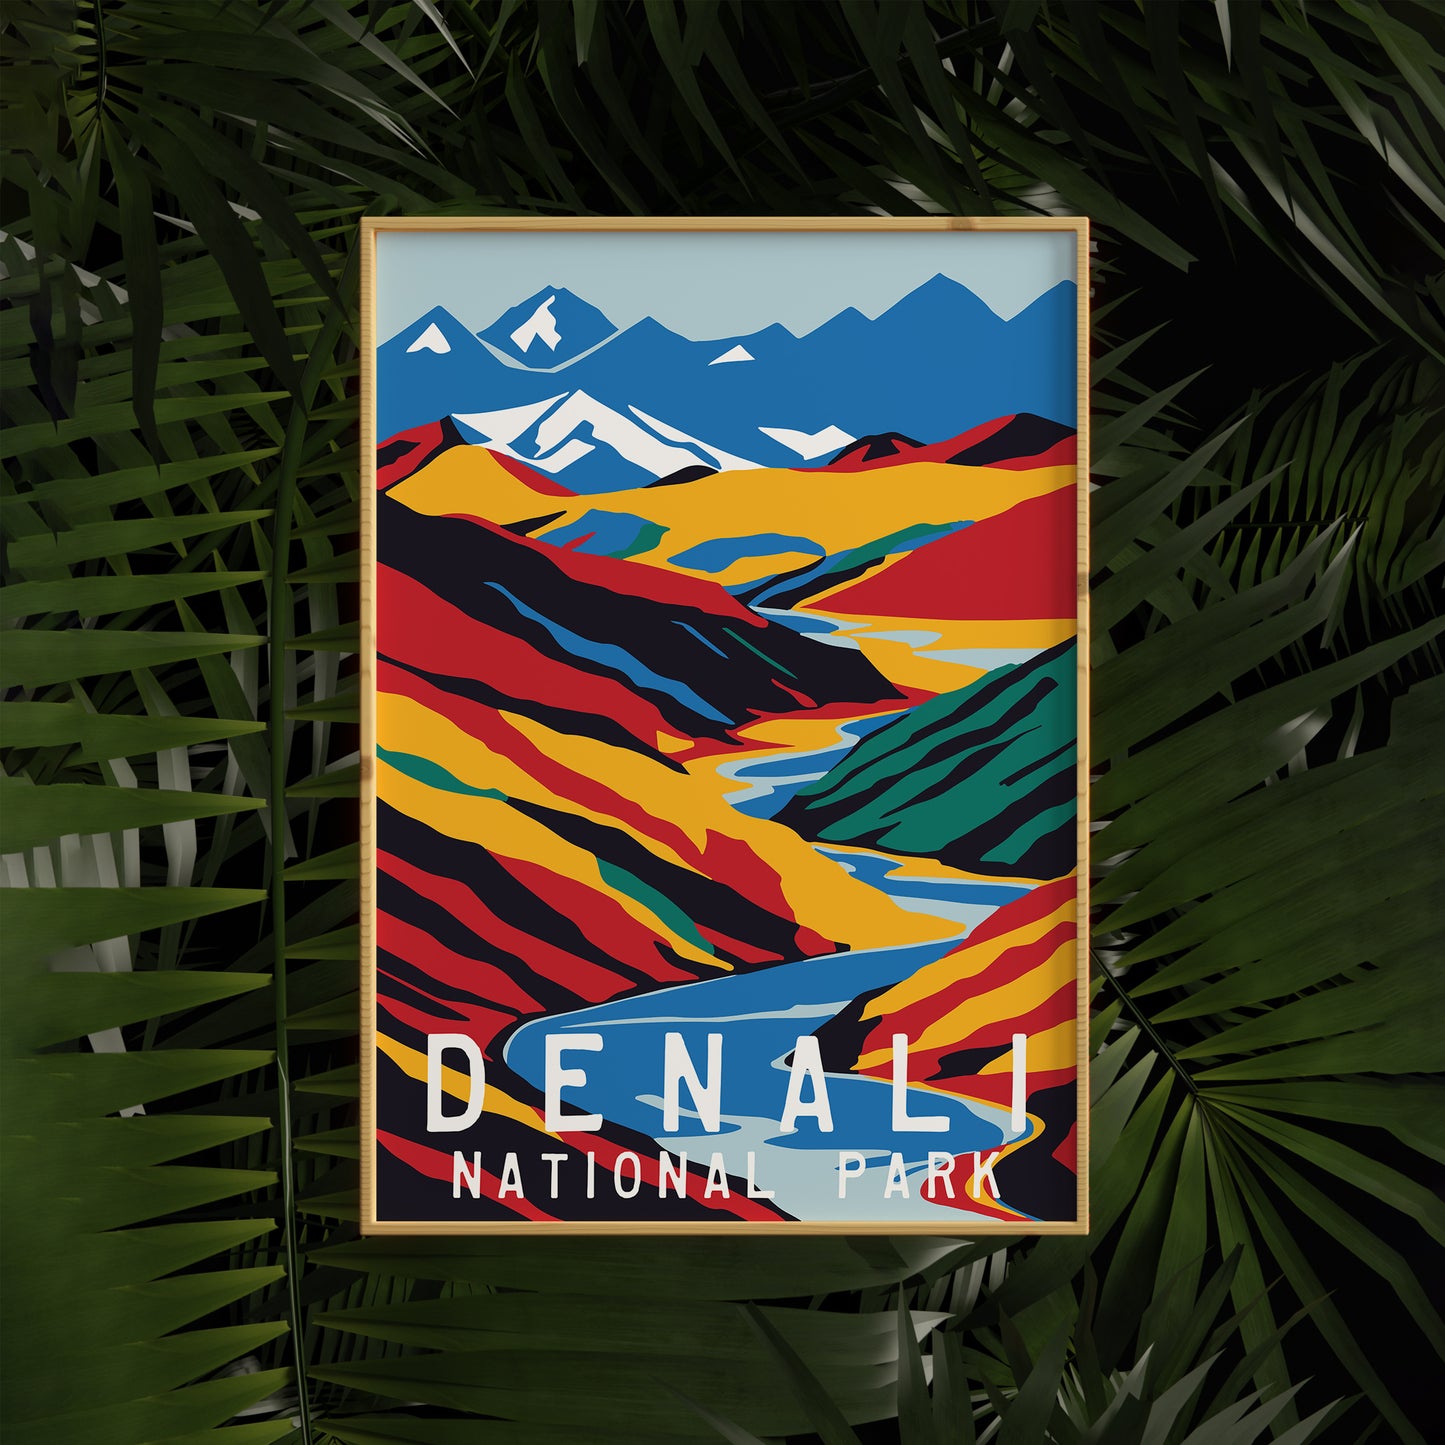 Denali National Park Travel Print